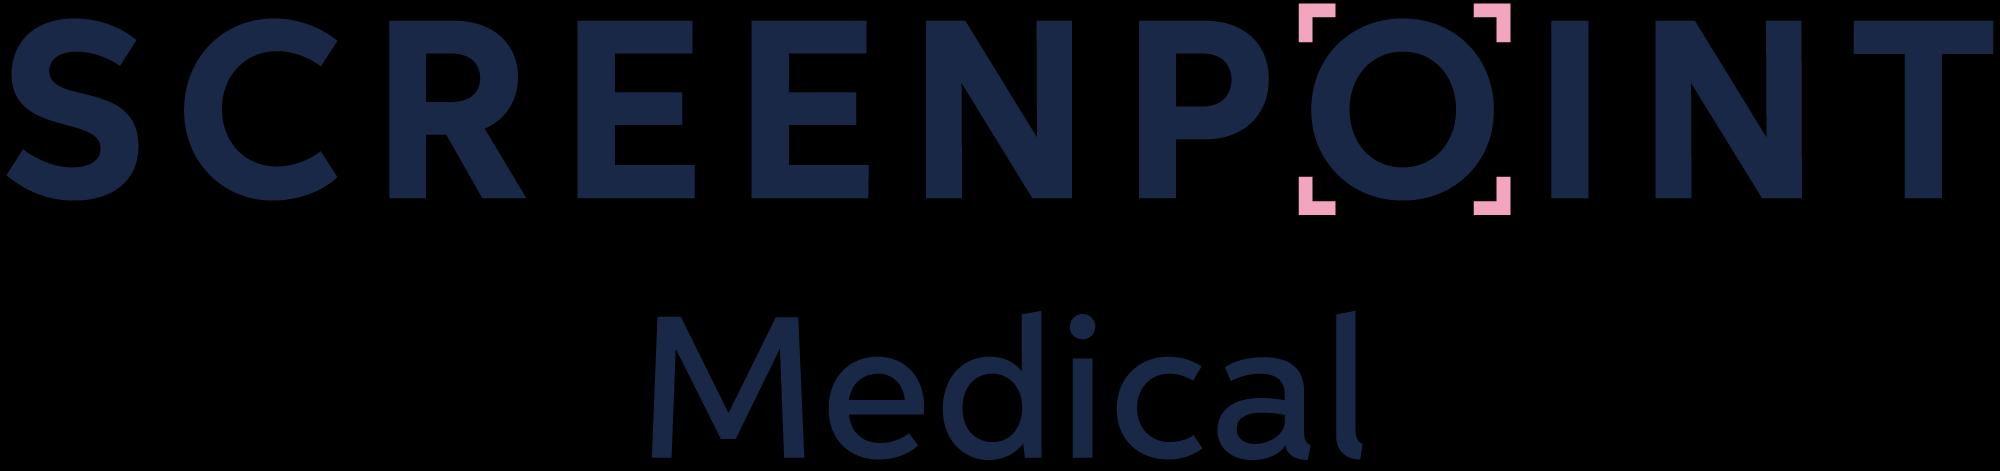 Screenpoint Medical_logo